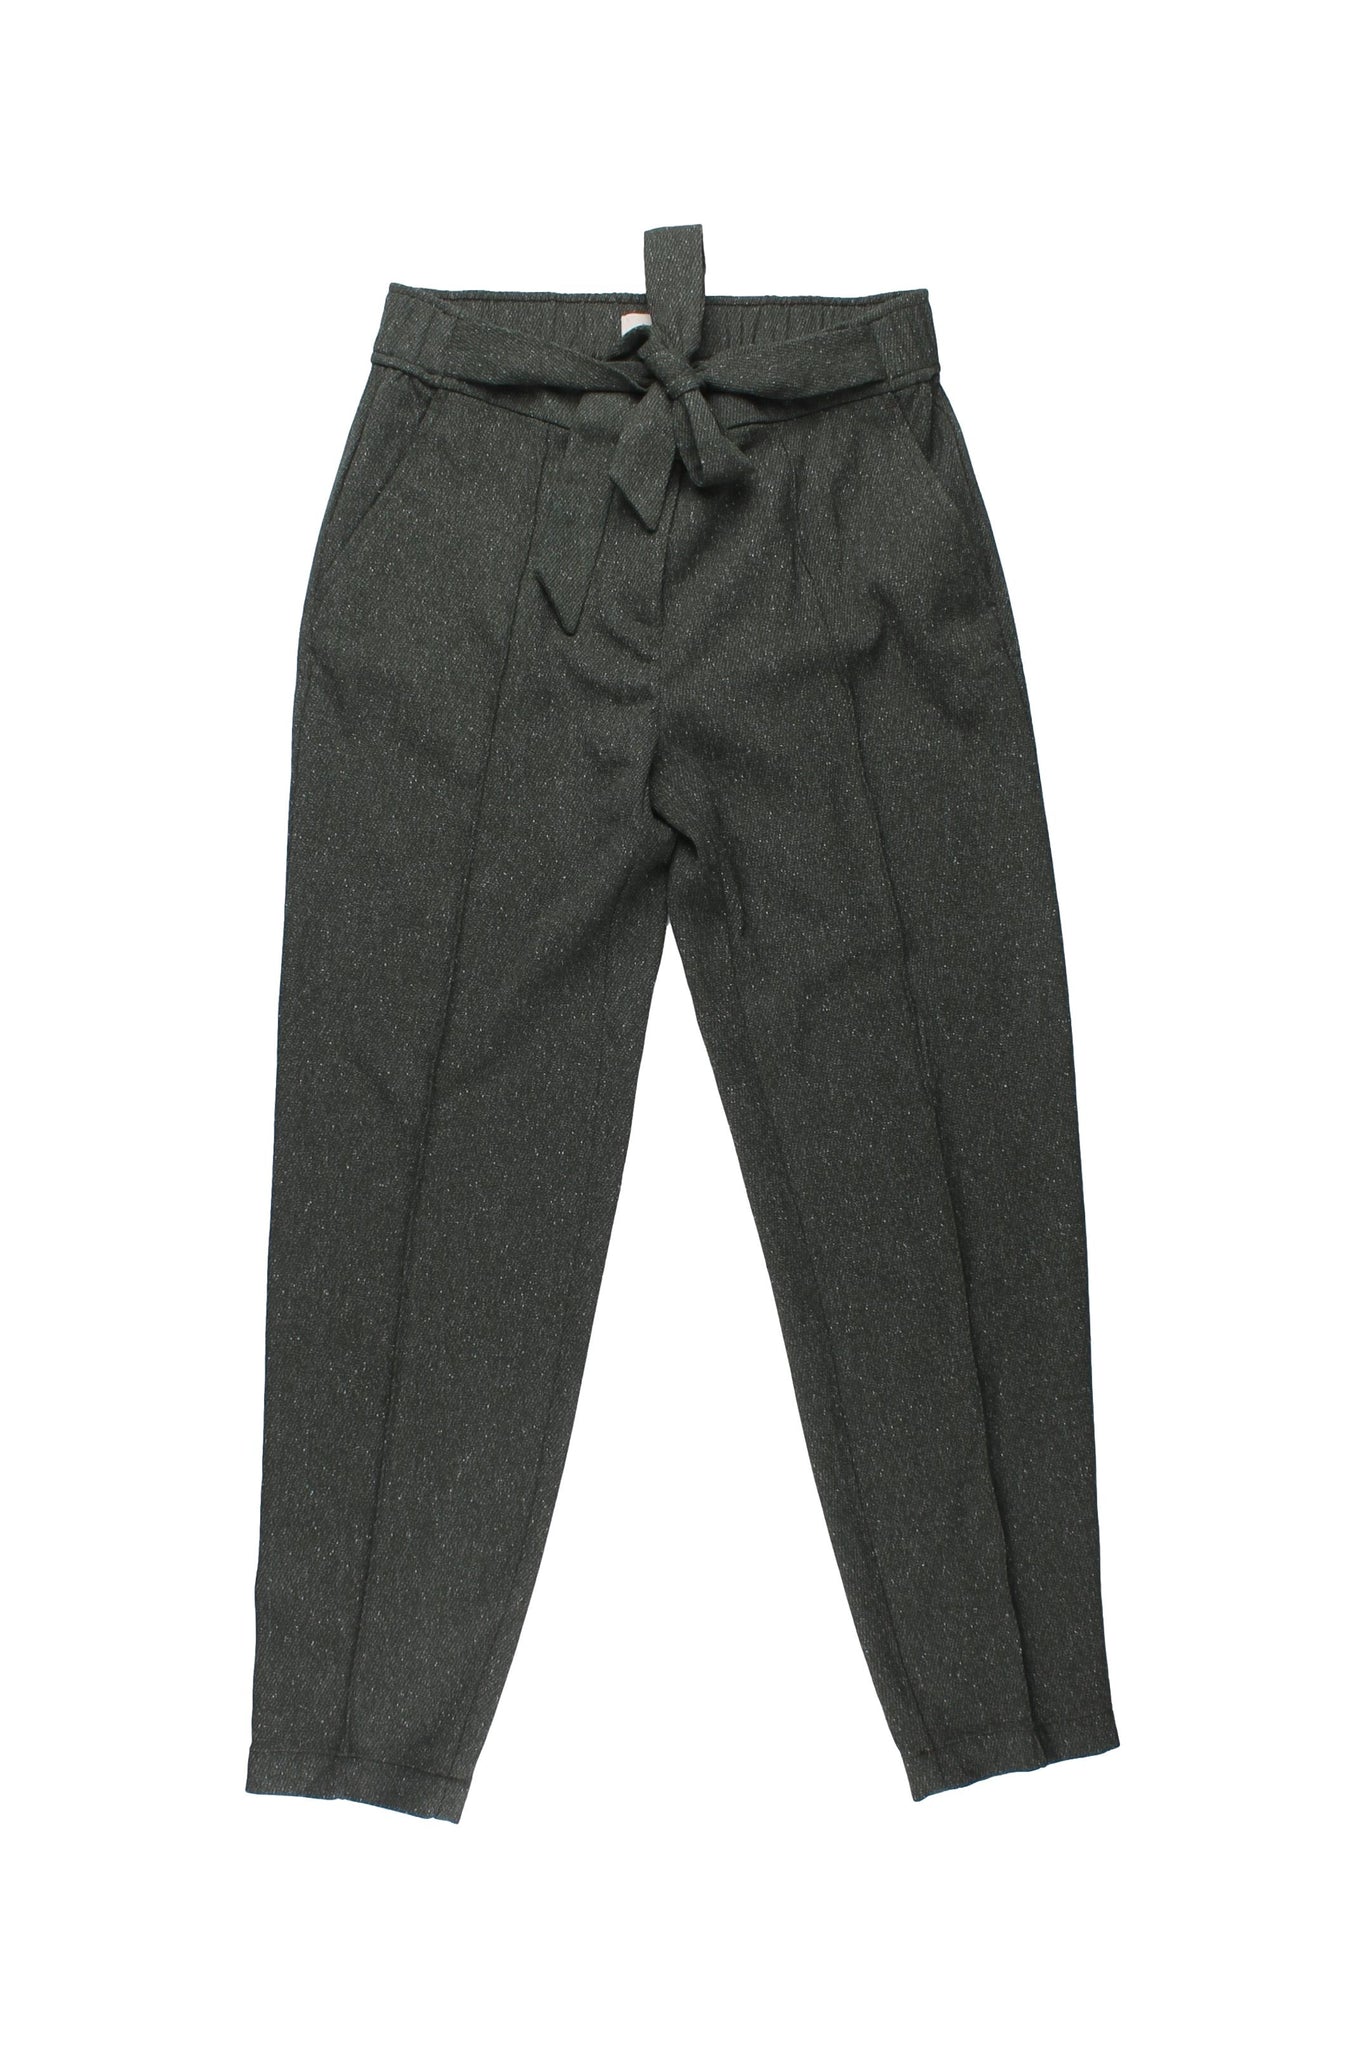 LOFT - Pantalon Recto Color Verde Con Cinturon